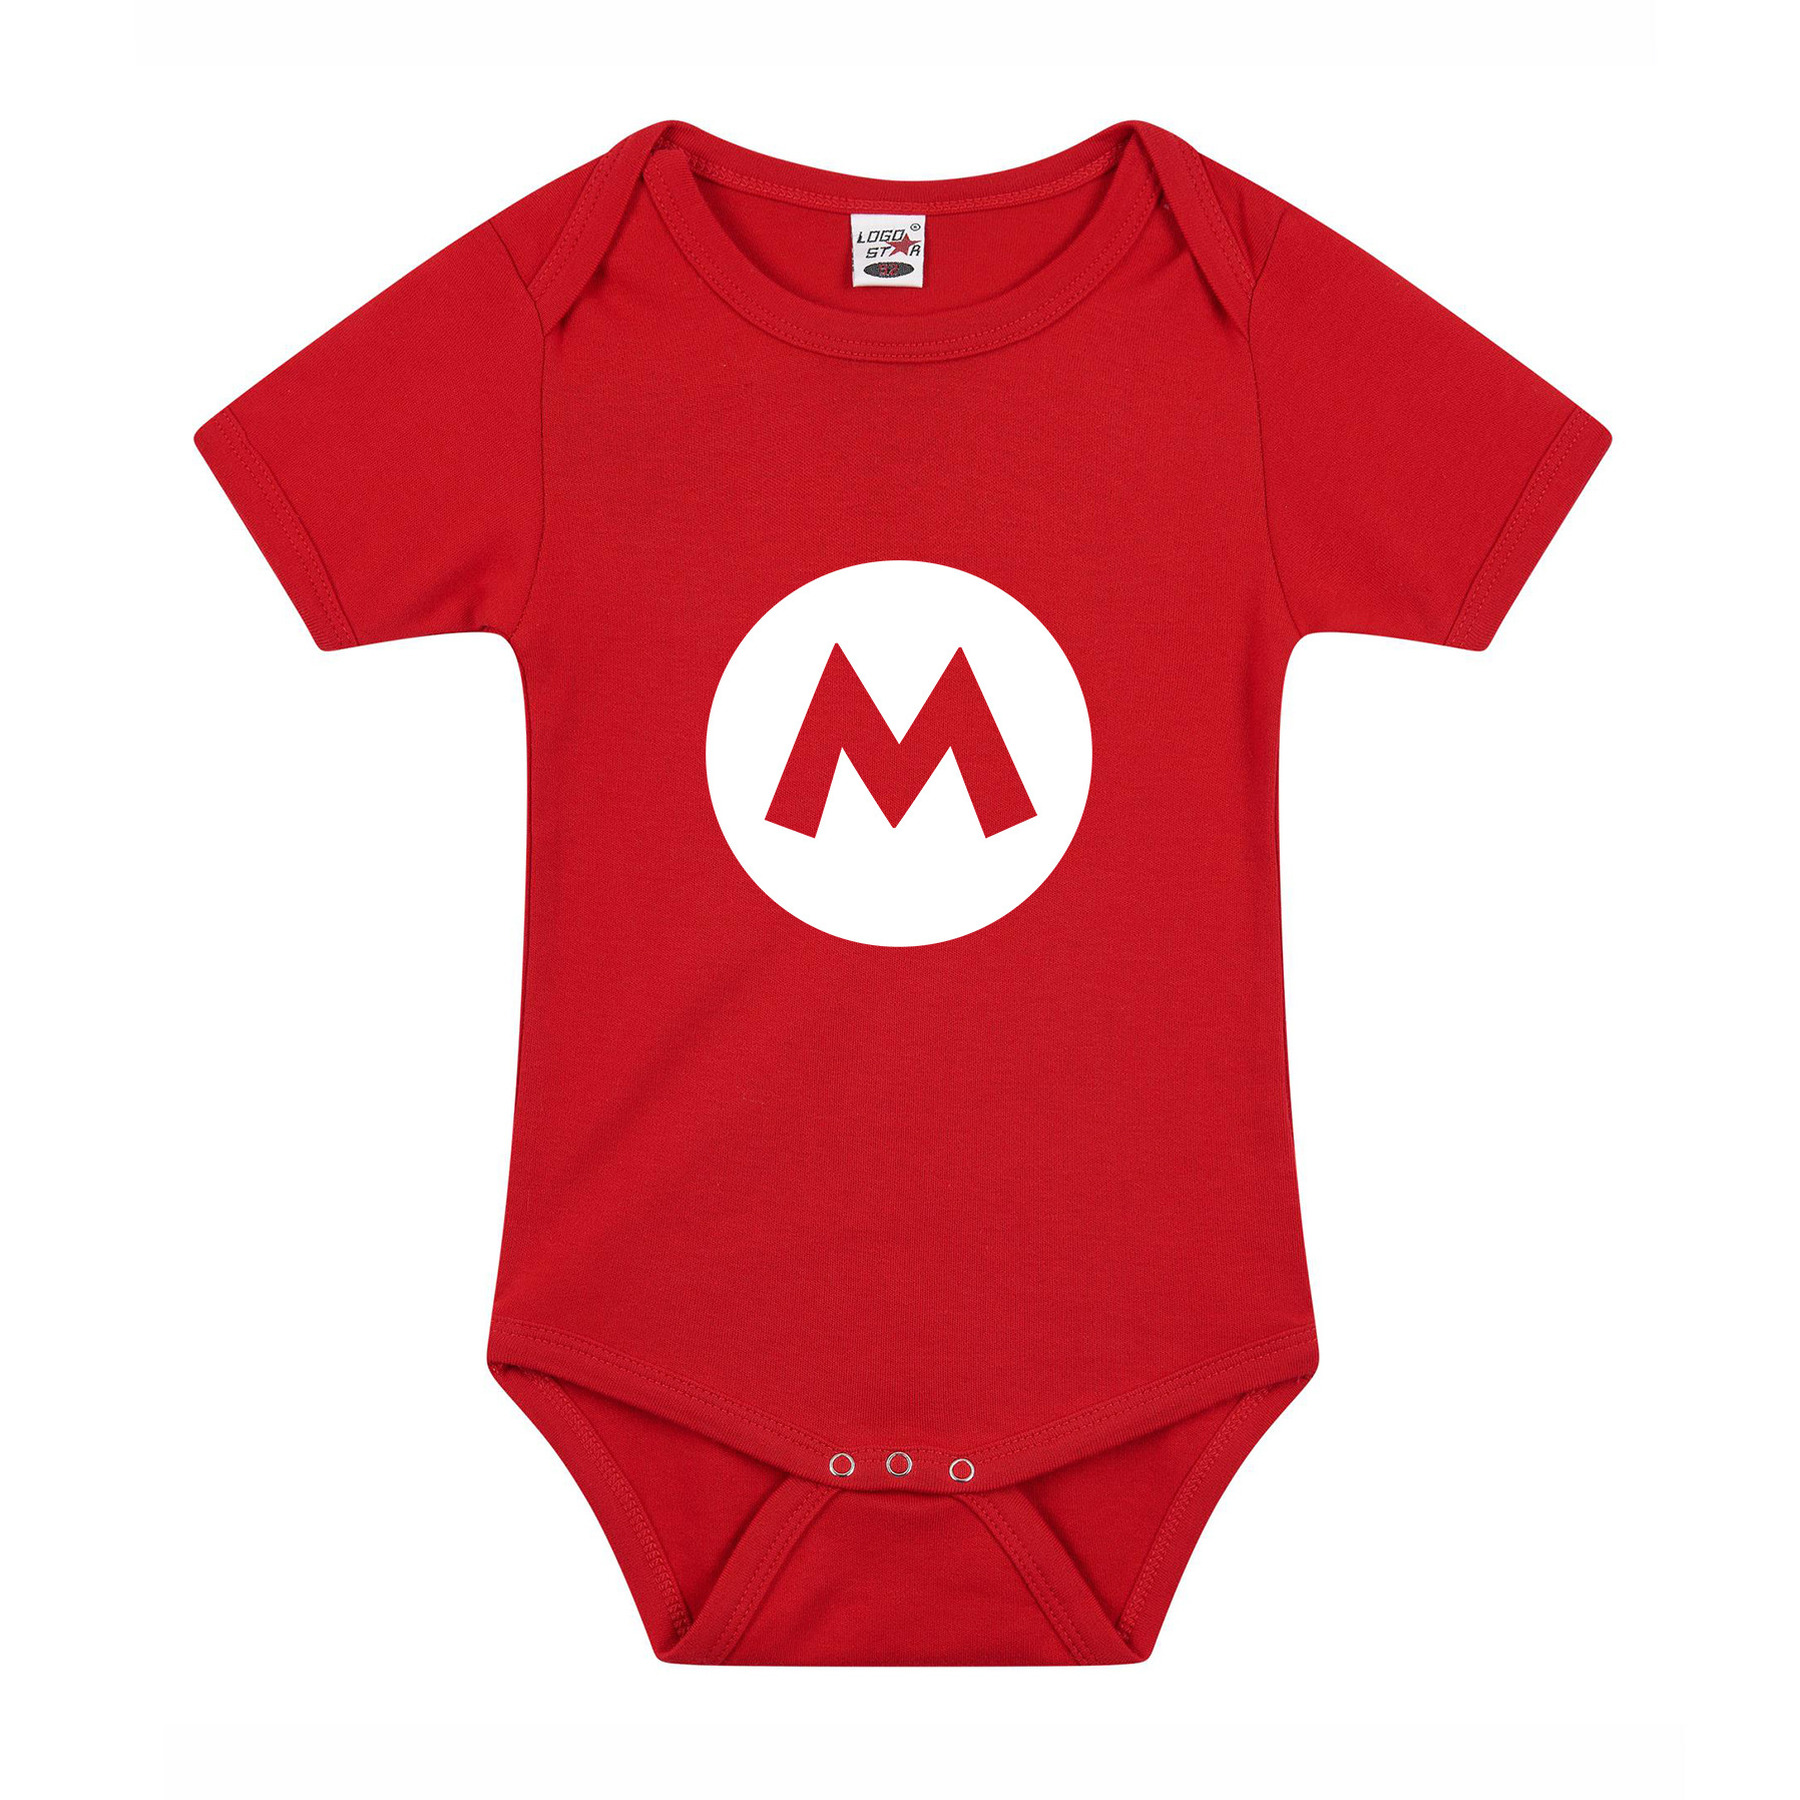 Verkleed-cadeau baby rompertje Mario M rood jongen-meisje